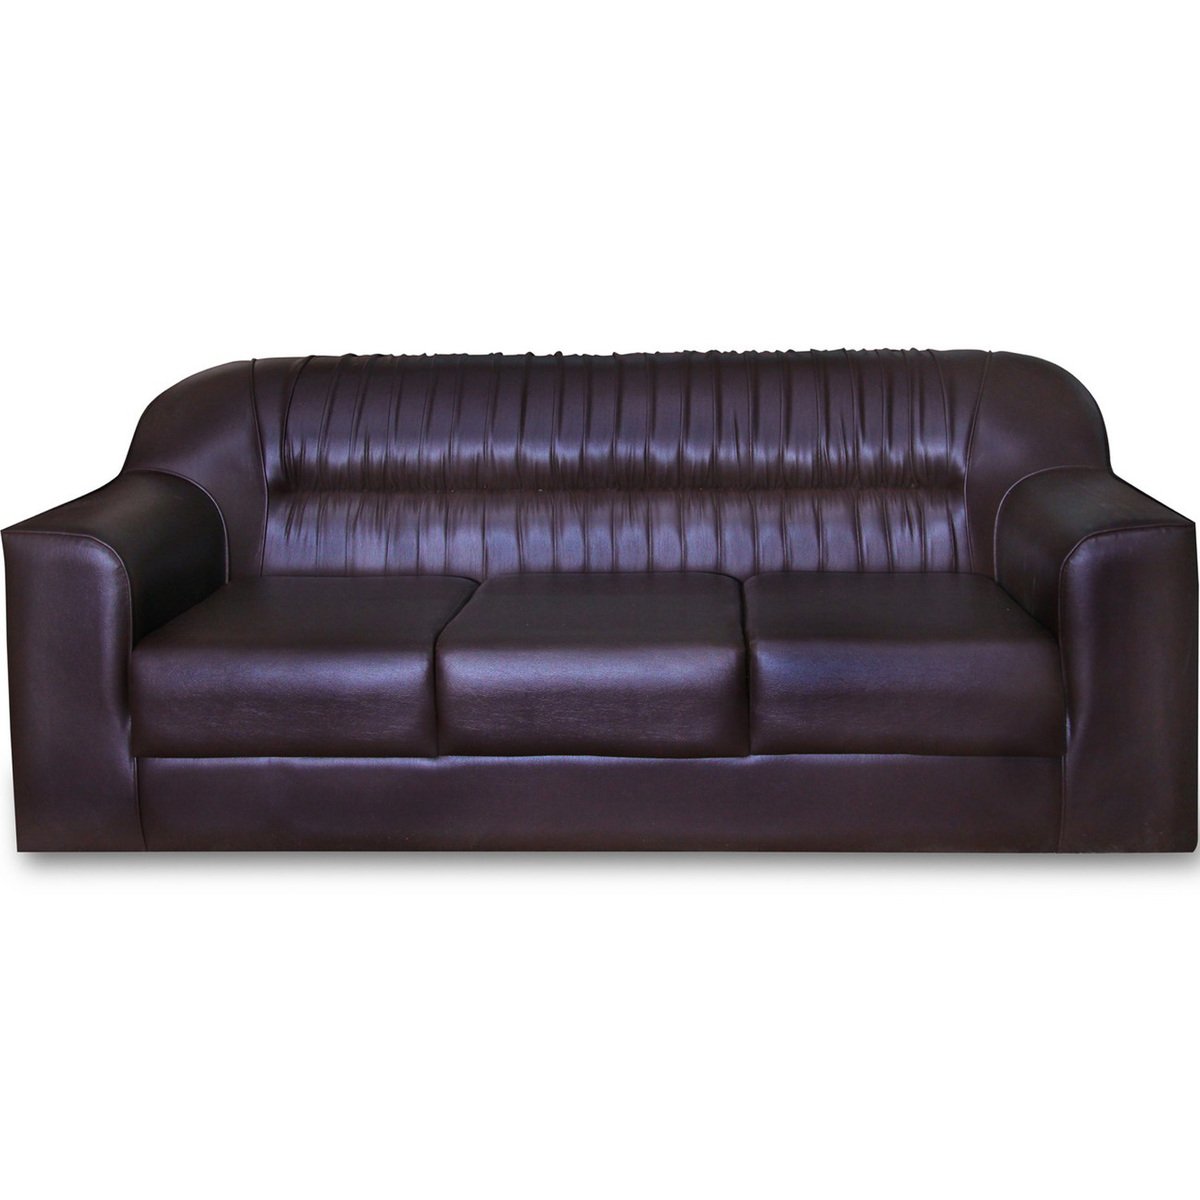 Design Plus Sofa Set 5 Seater (3+1+1) Brown